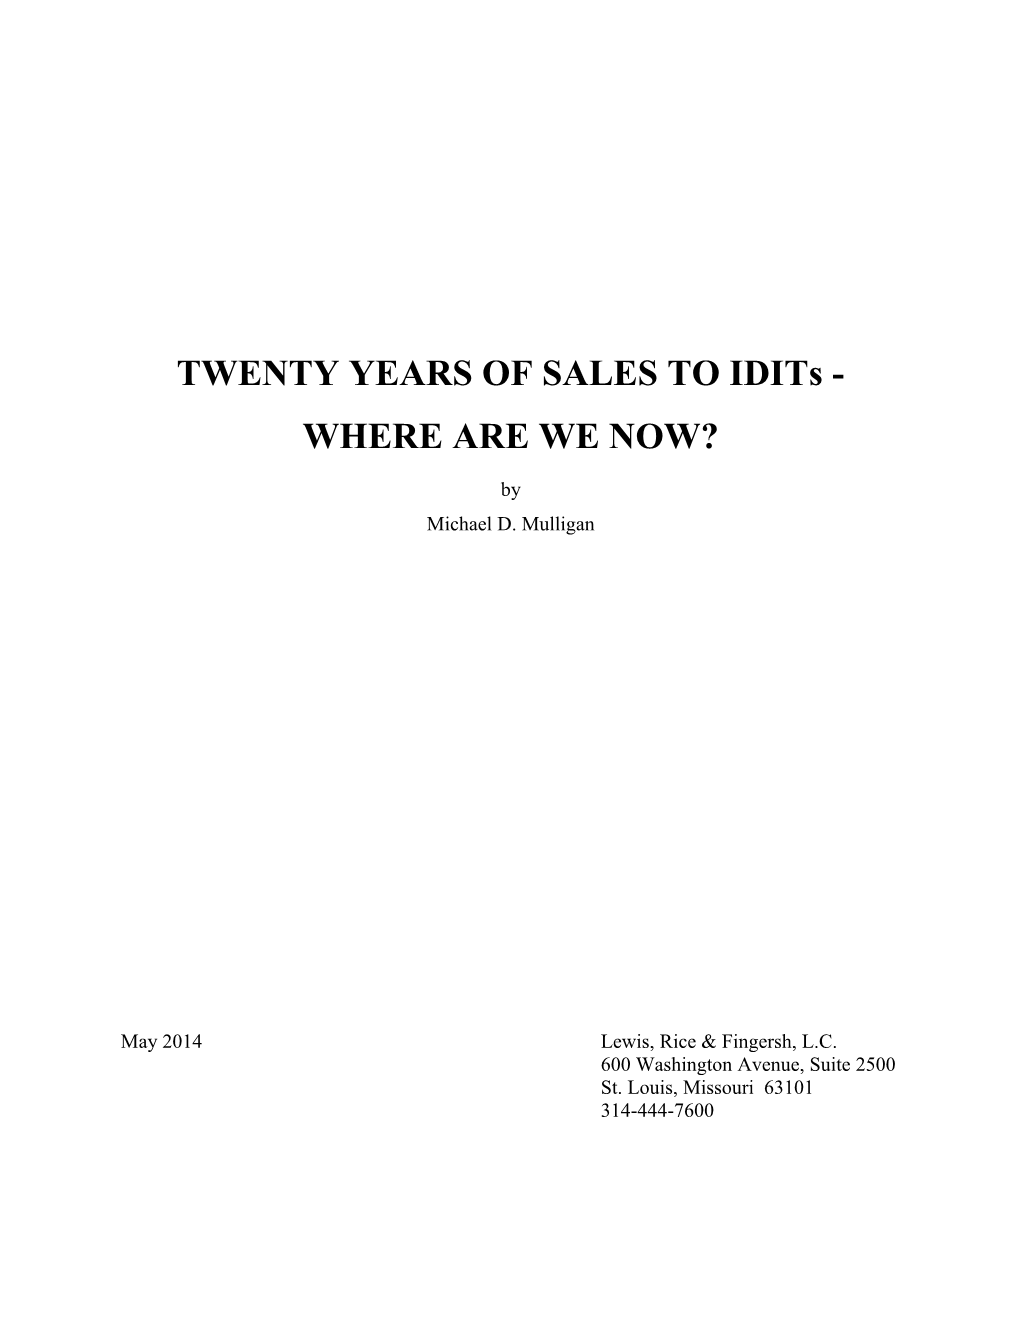 TWENTY YEARS of SALES to Idits